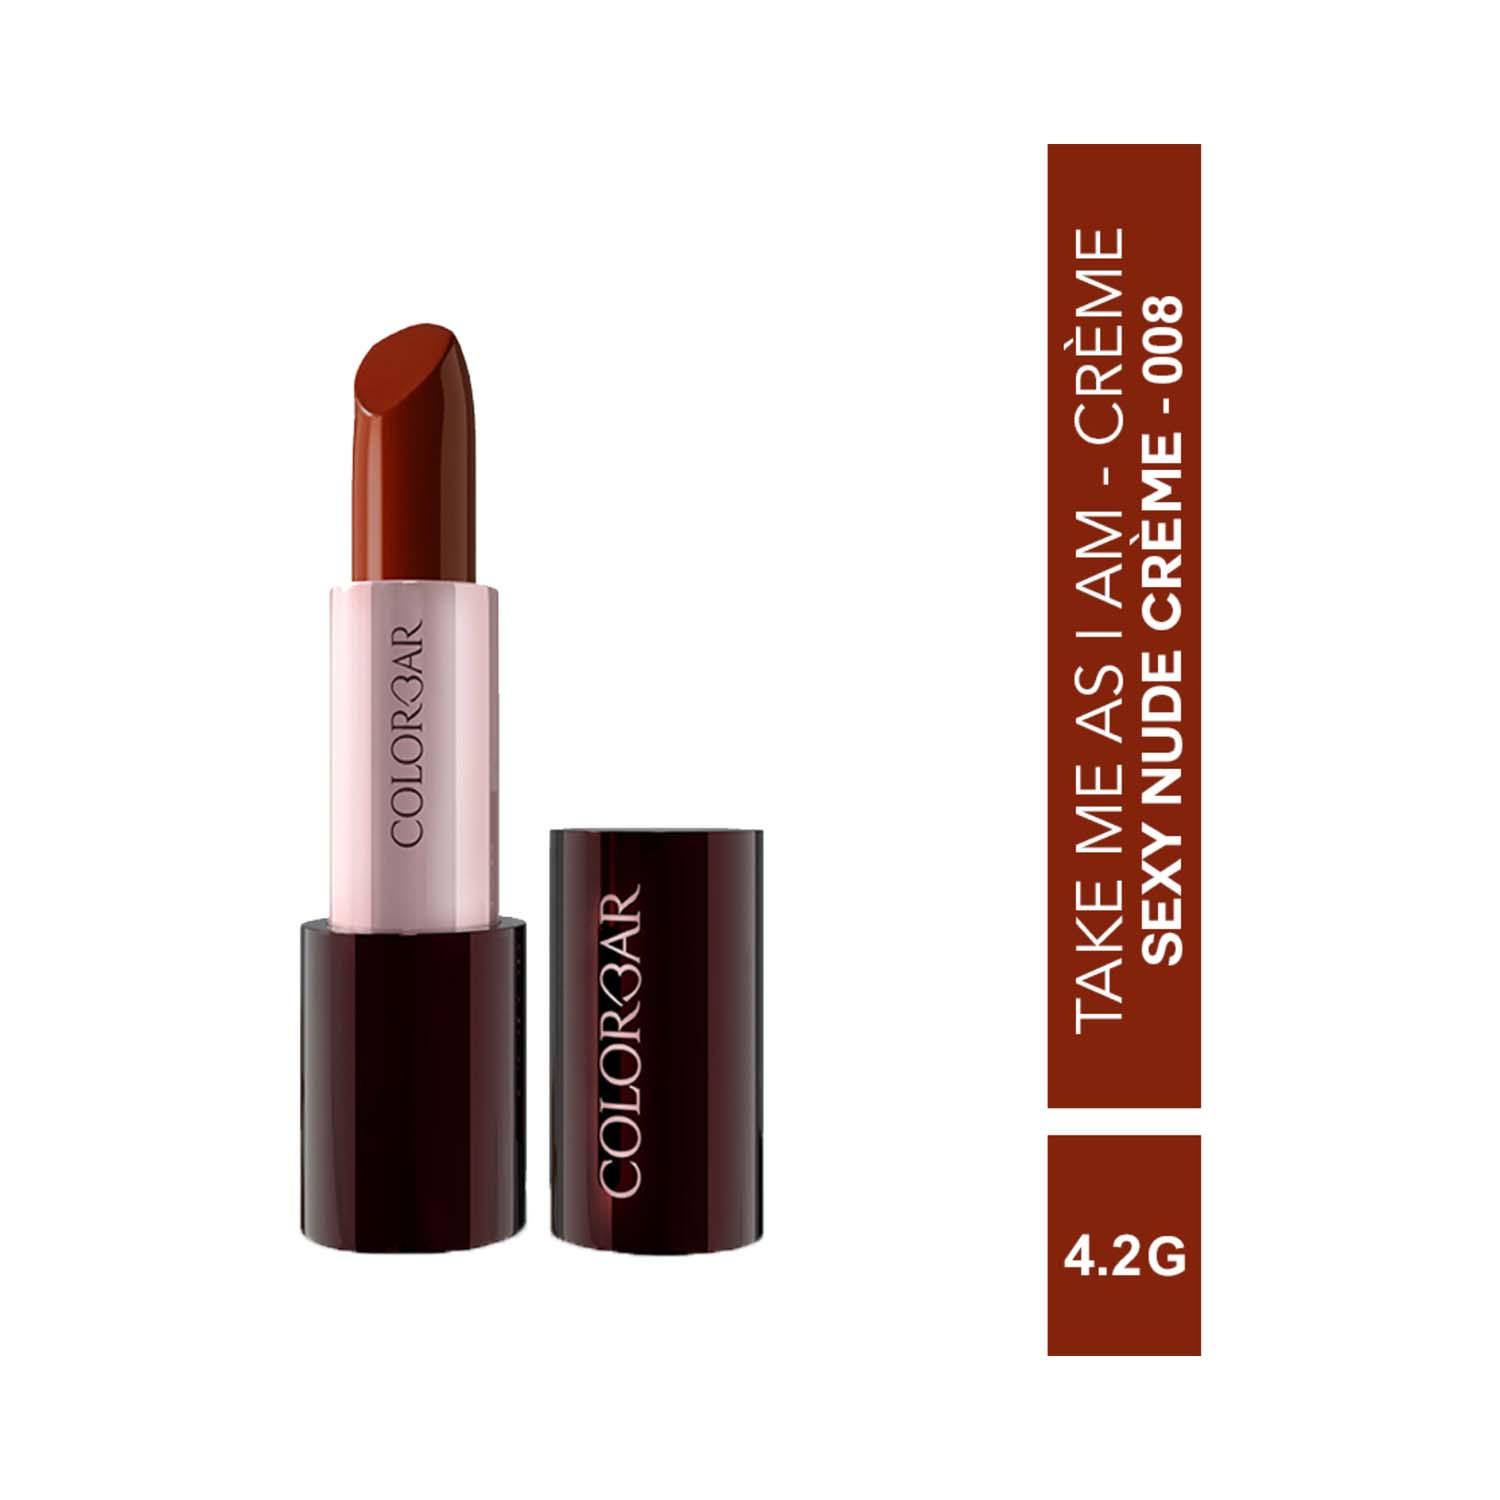 Colorbar | Colorbar Take Me As I Am Vegan Creme Lipstick - Sexy Nude Creme - [008] (4.2 g)